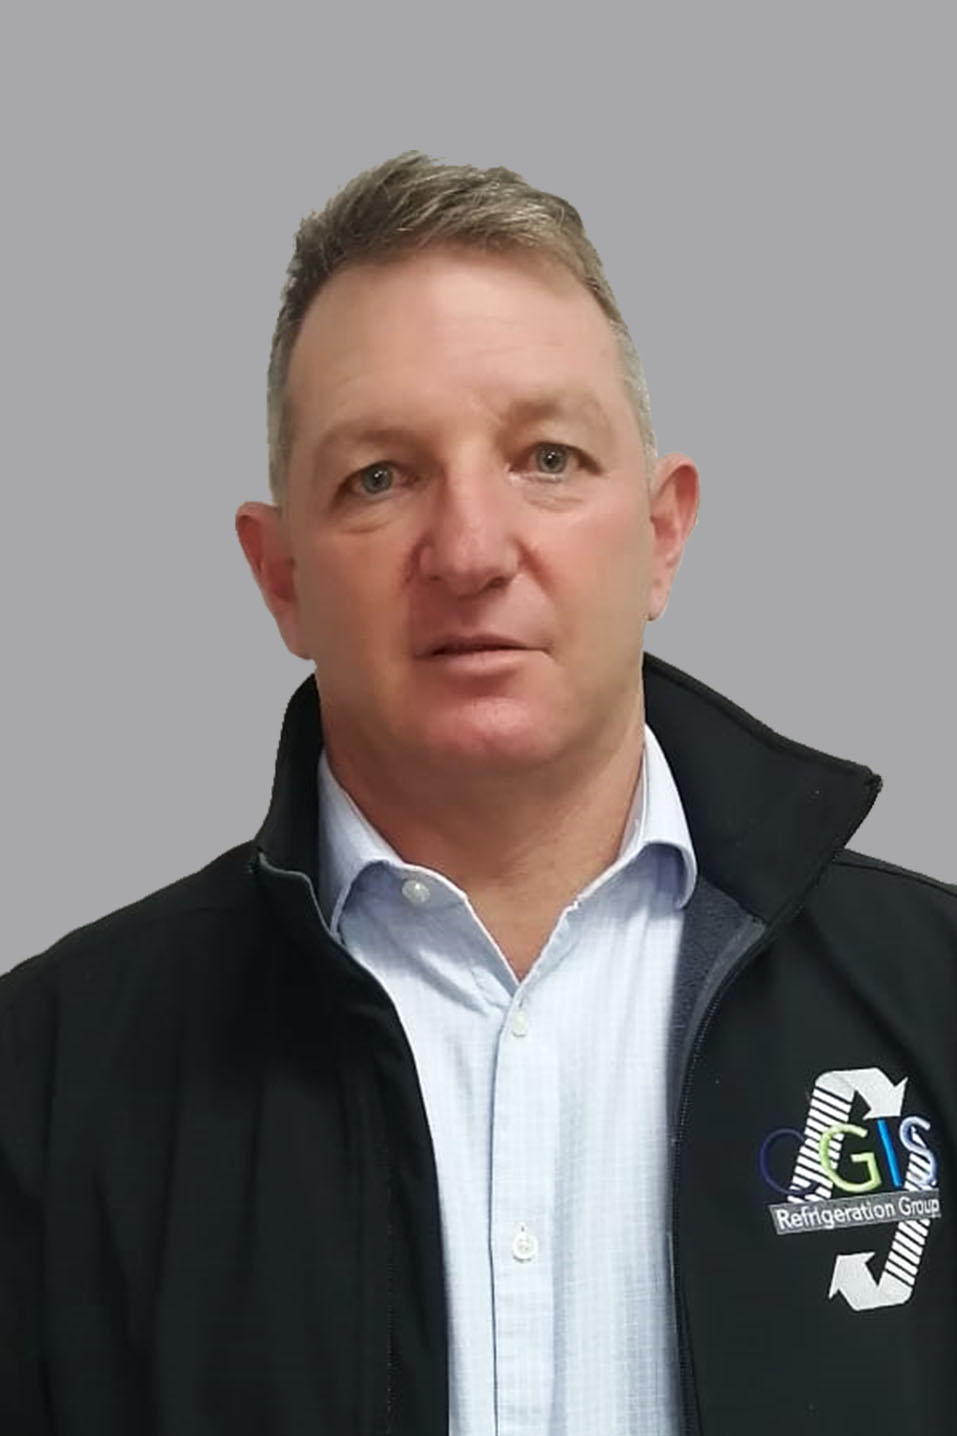 Martin Heyman, Managing Director, CGIS Refrigeration Group